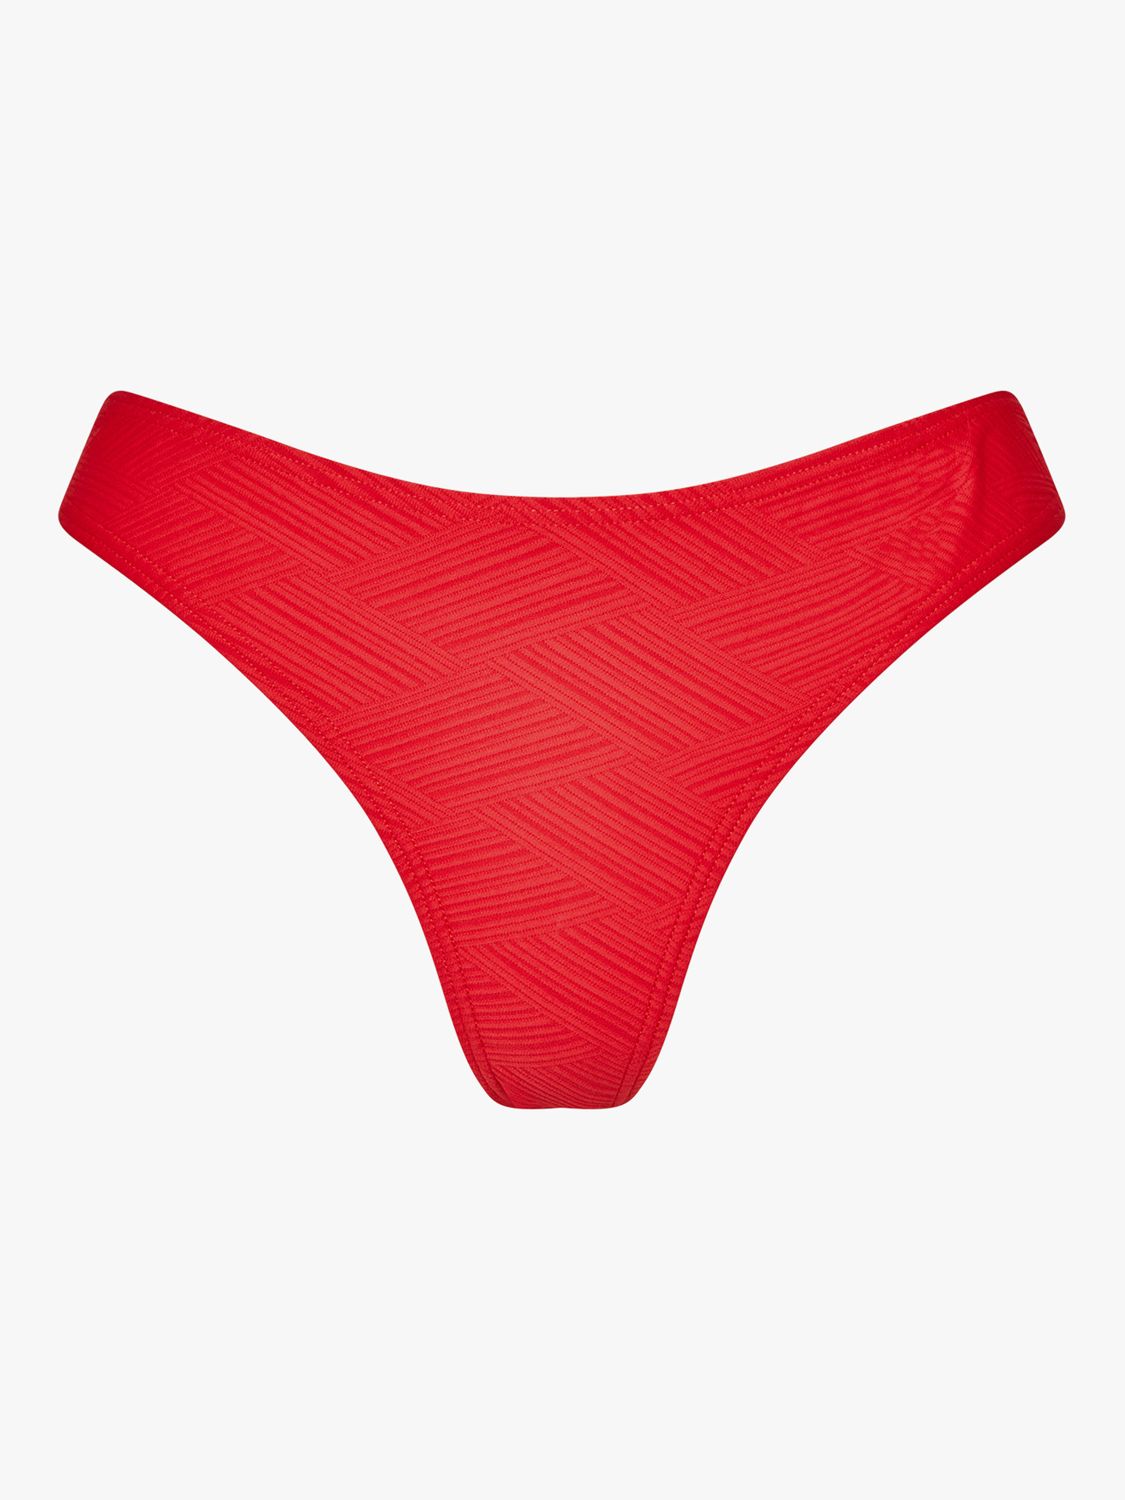 Accessorize Textured Bikini Bottoms, Red, 6